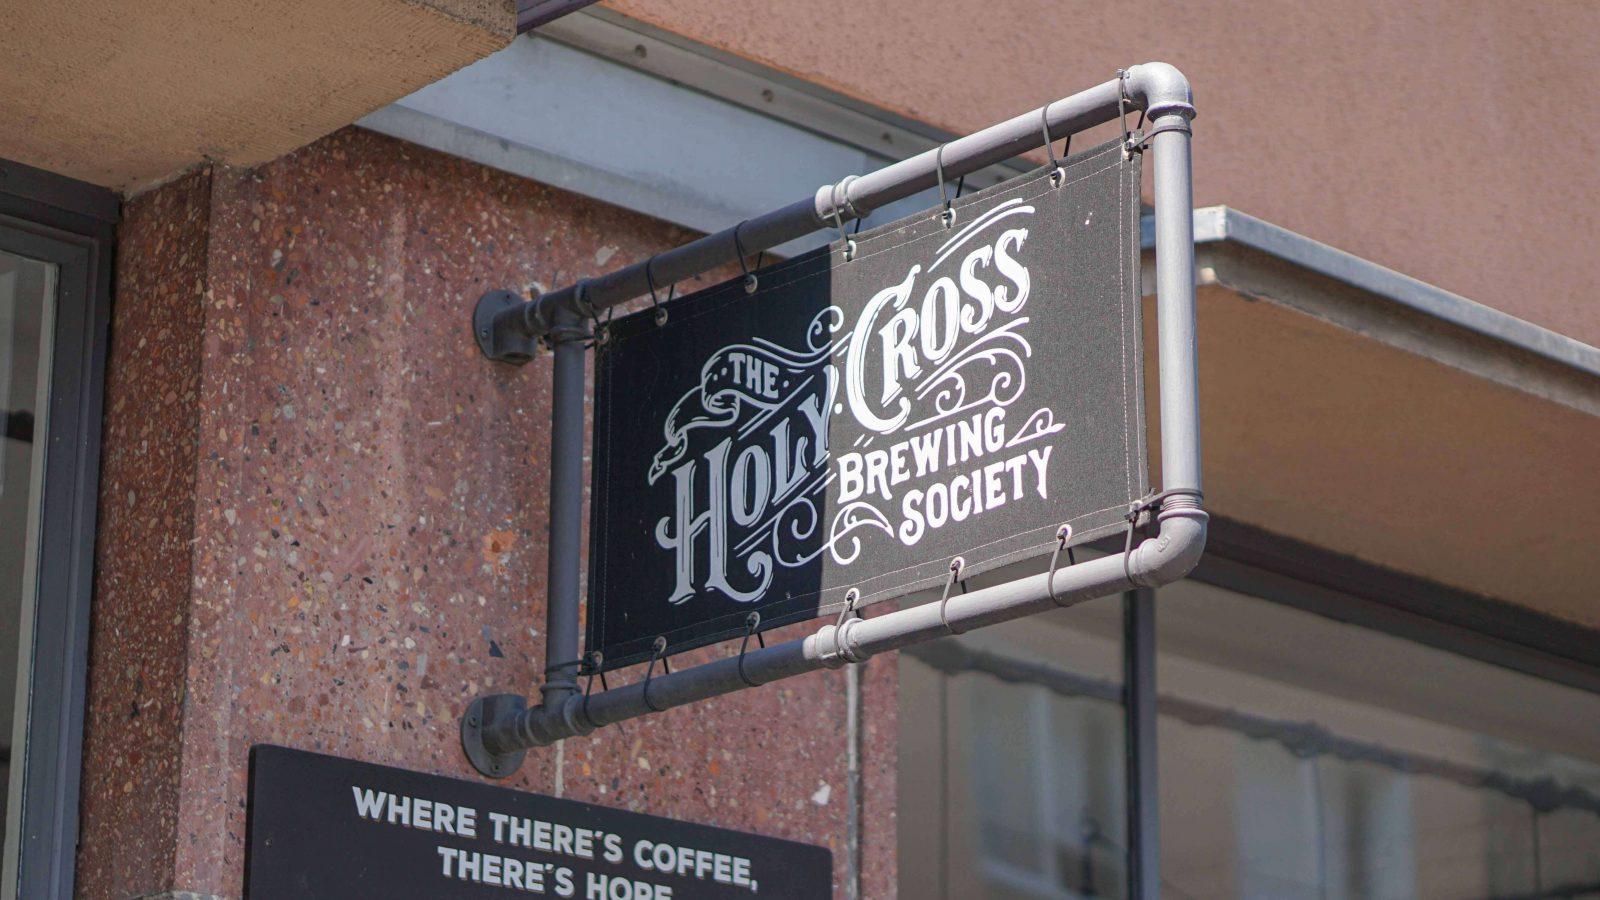 Holy-Cross-Brewing-Society-Frankfurt-The-Coffeevine-5